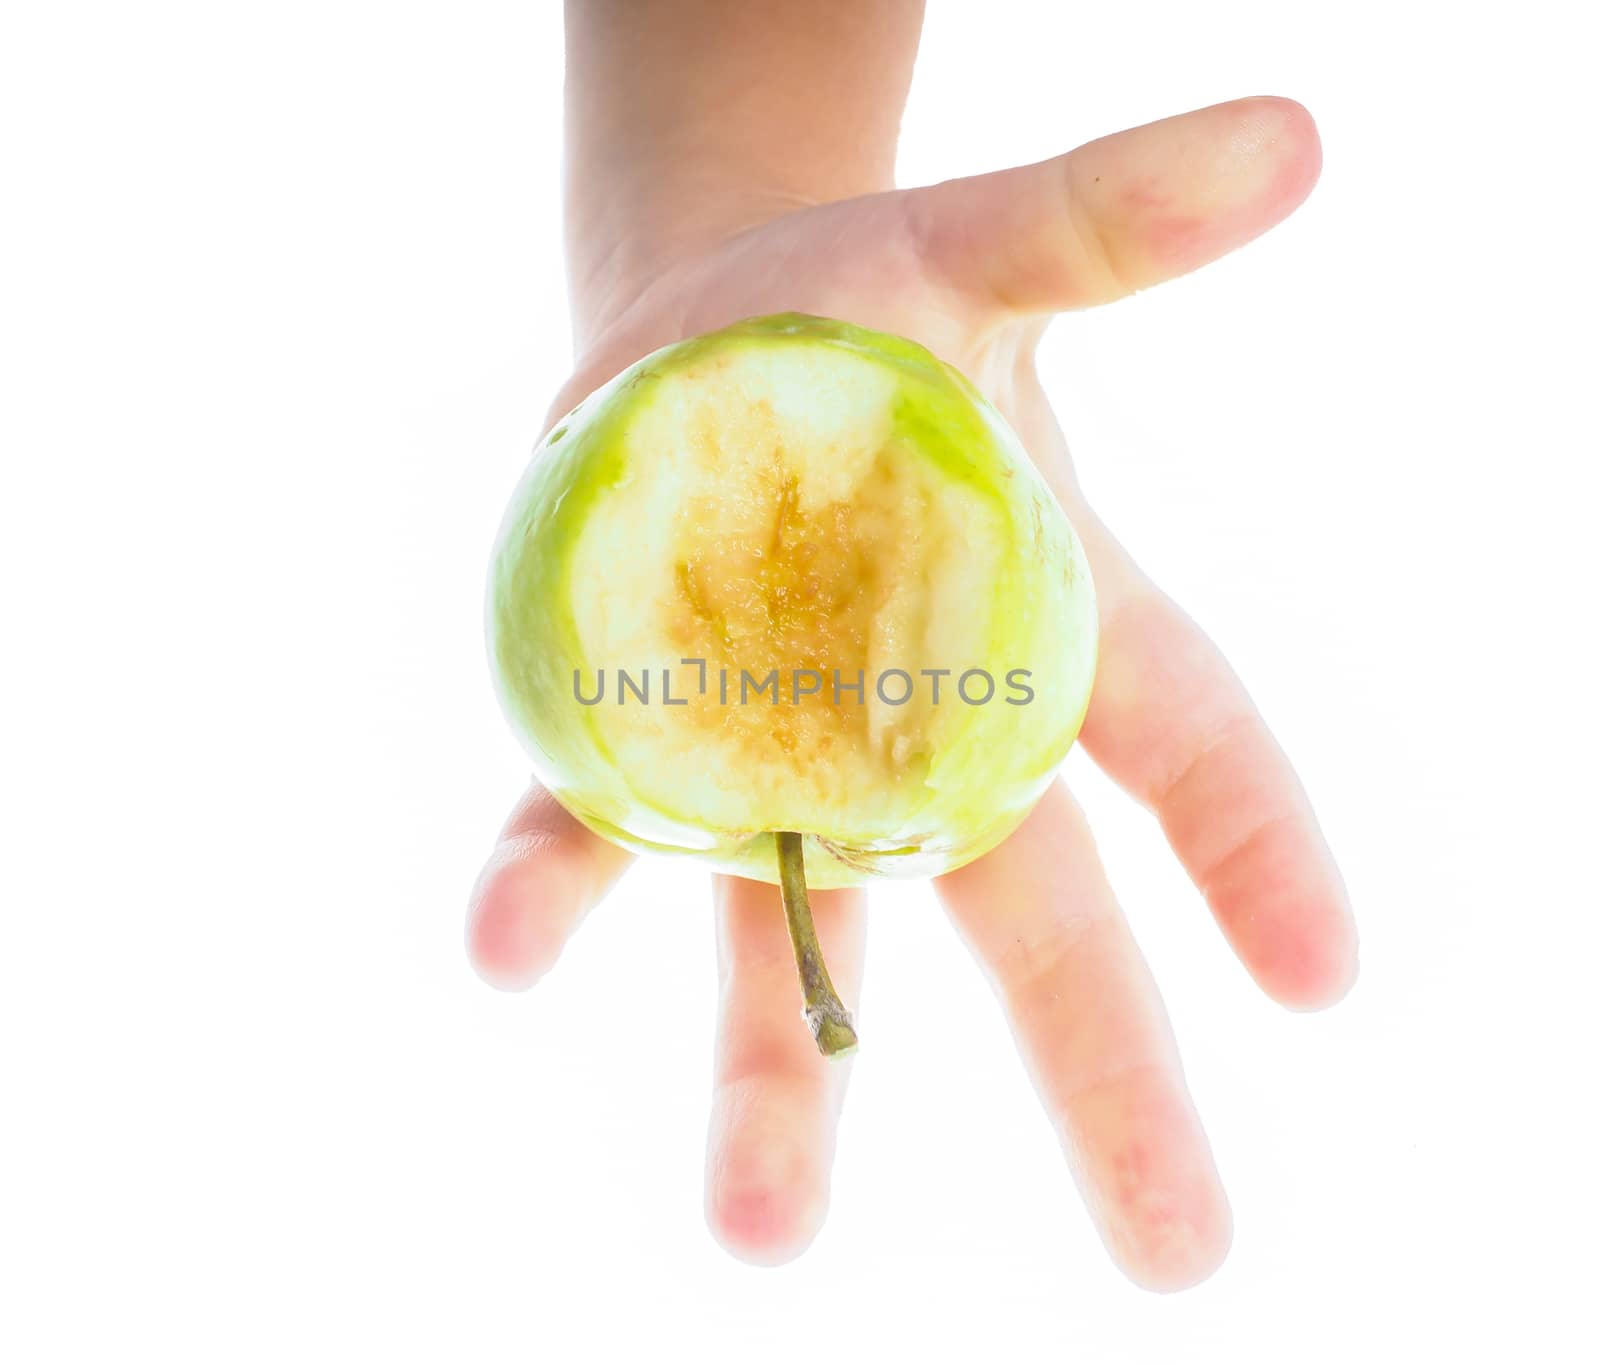 Little childs hand holding an unripe green apple towards white